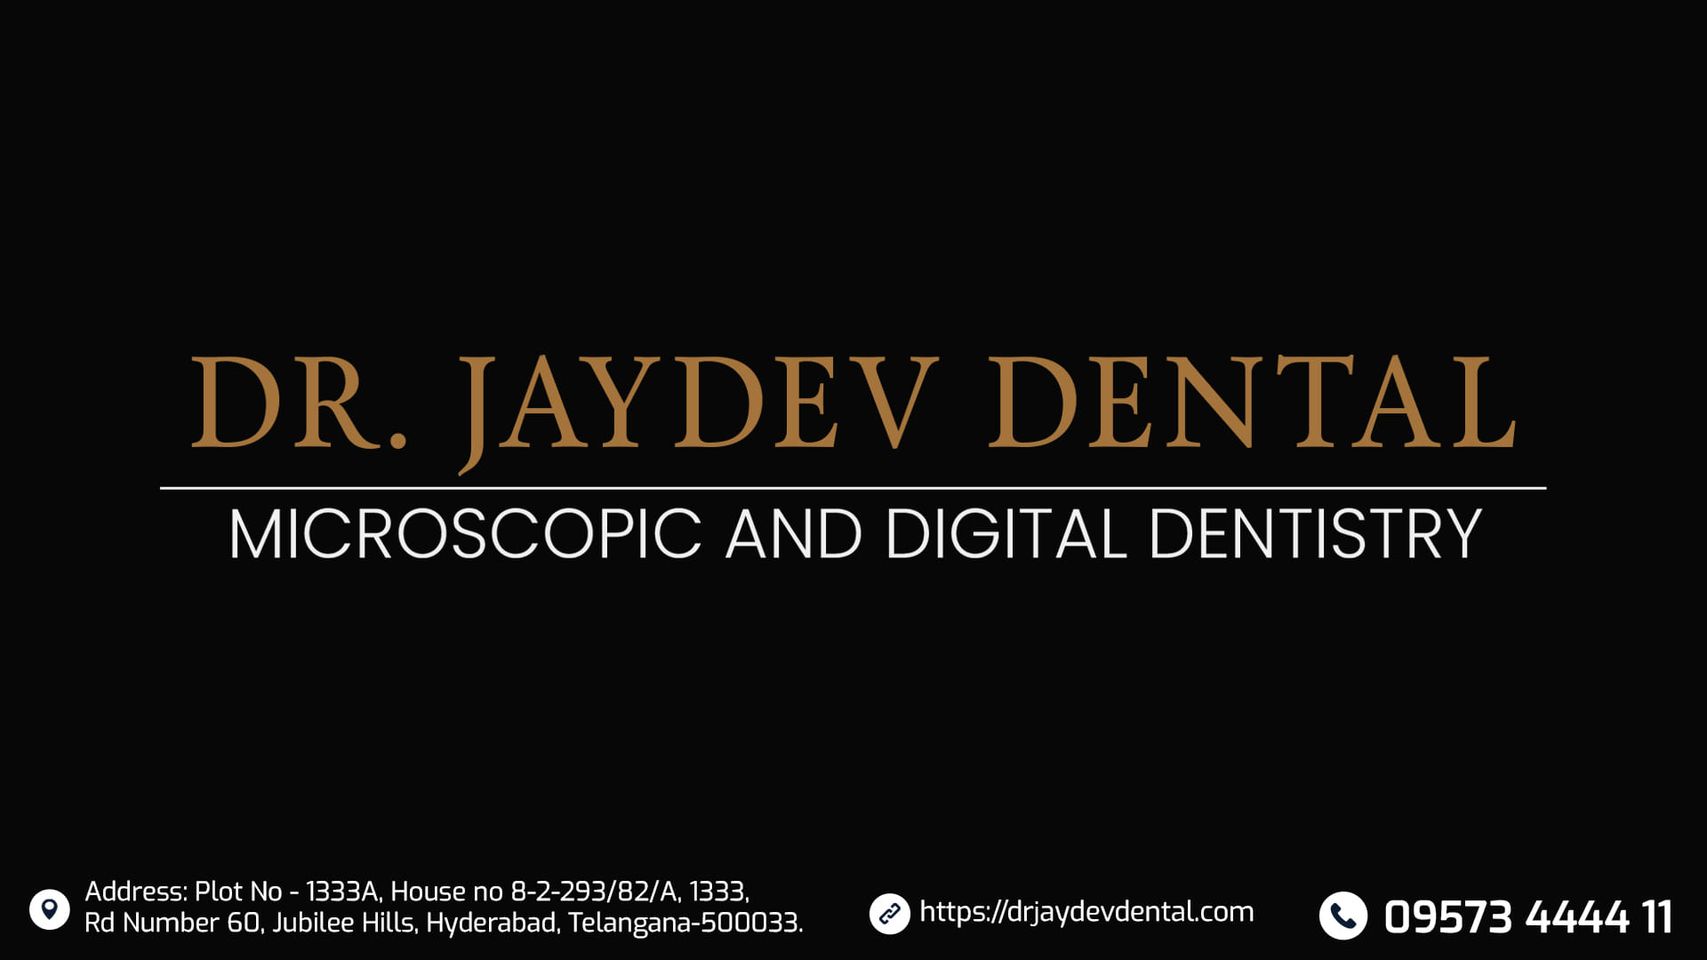  Dr. Jaydev Dental - Advanced Dental Hospital in Hyderabad